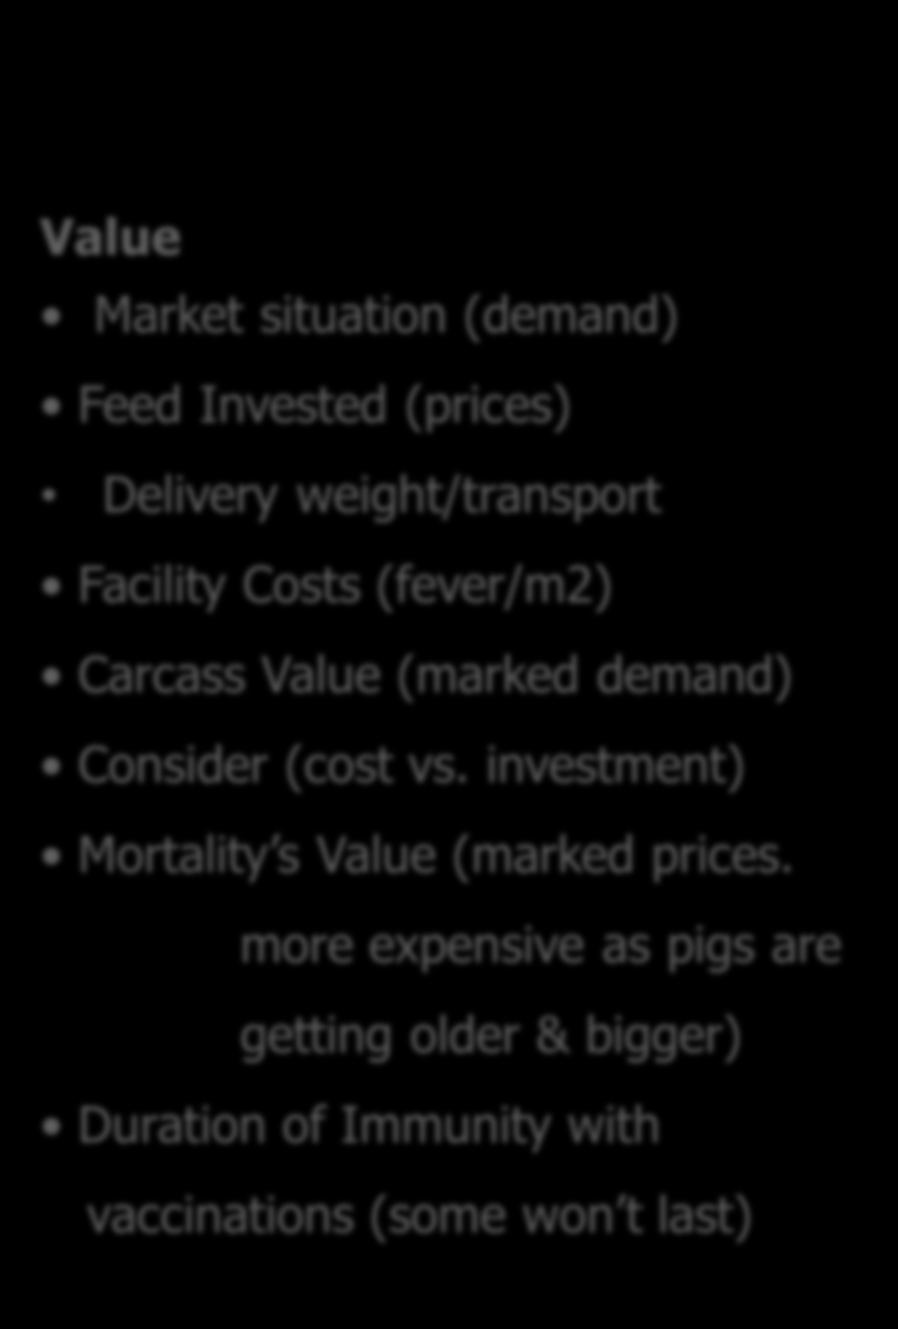 4 Major Factors Value Market situation (demand) Feed